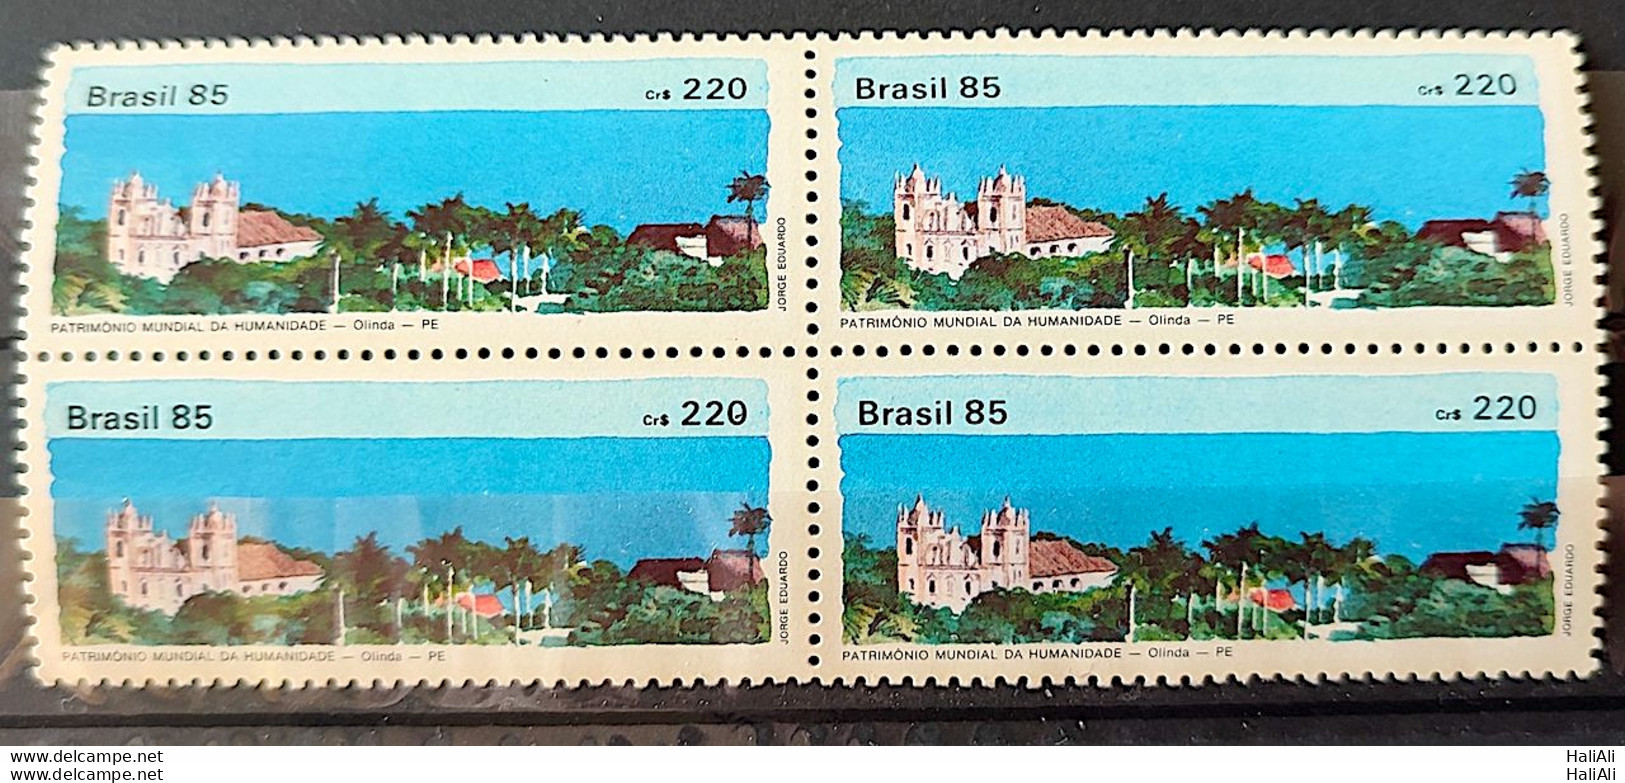 C 1449 Brazil Stamp World Heritage Of Humanity Olinda 1985 Block Of 4 - Unused Stamps